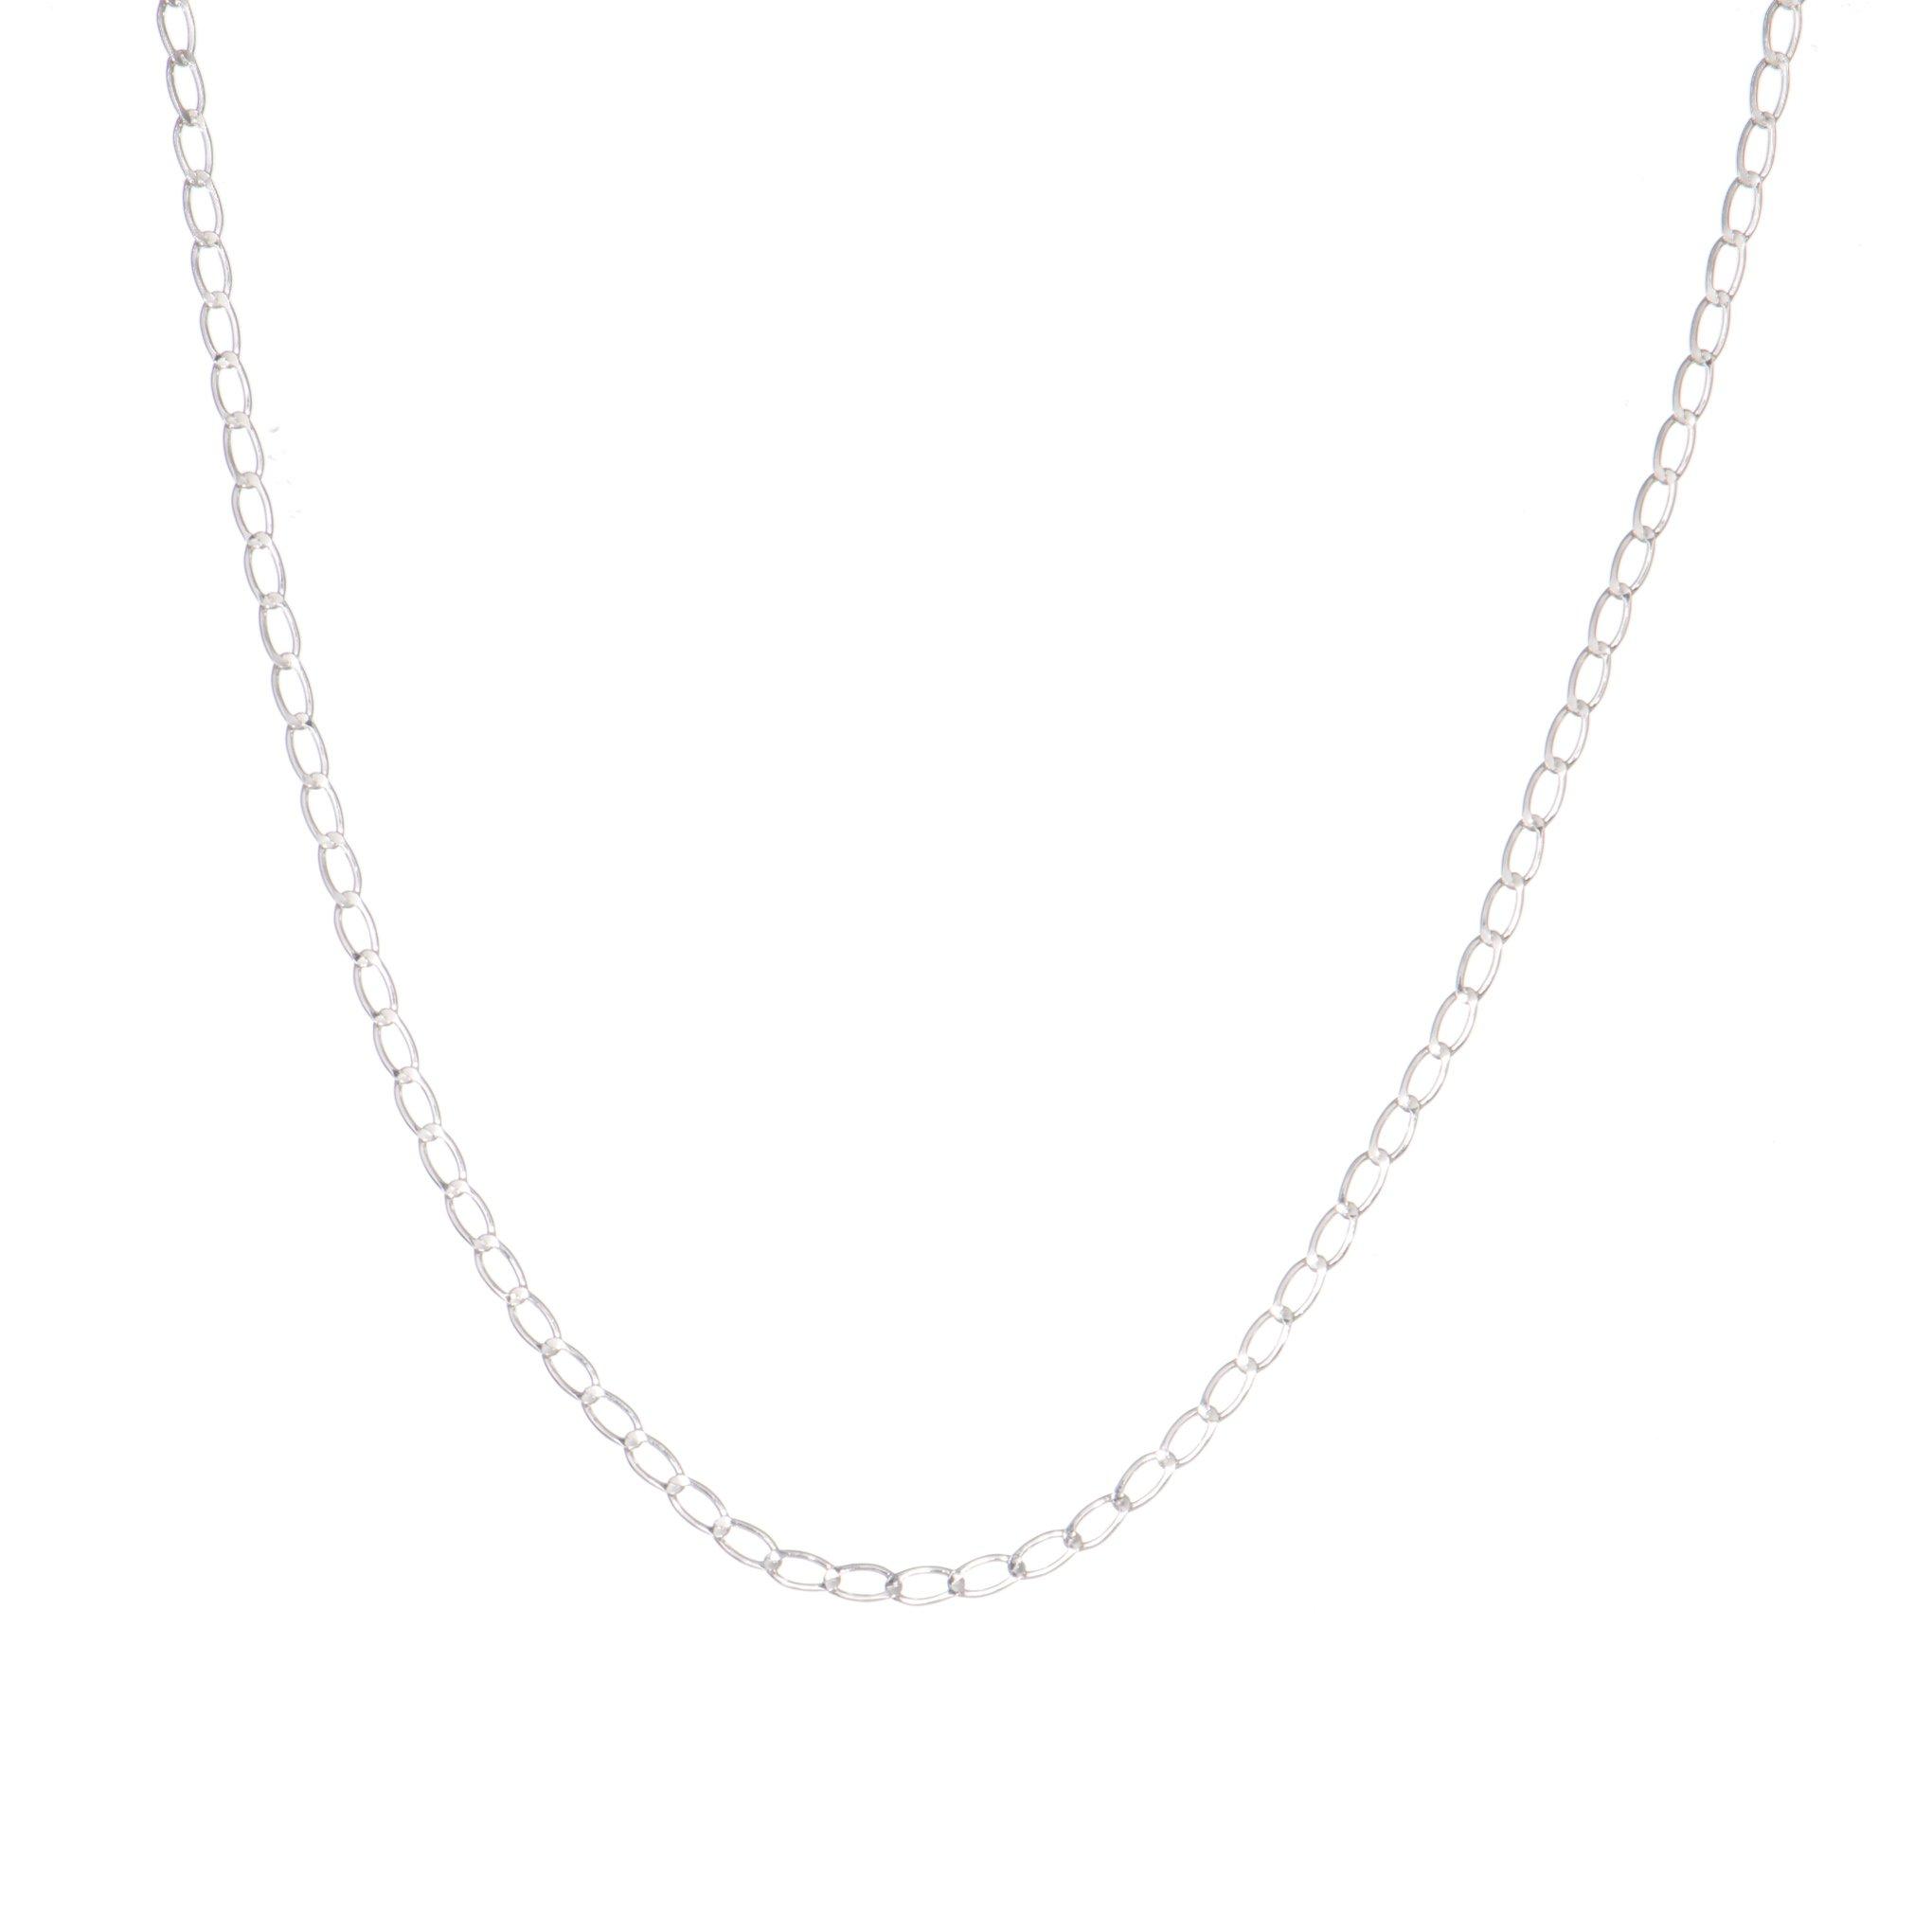 Silver Necklace And Bracelet Set Figaro Style Link 925 Sterling Italy | eBay